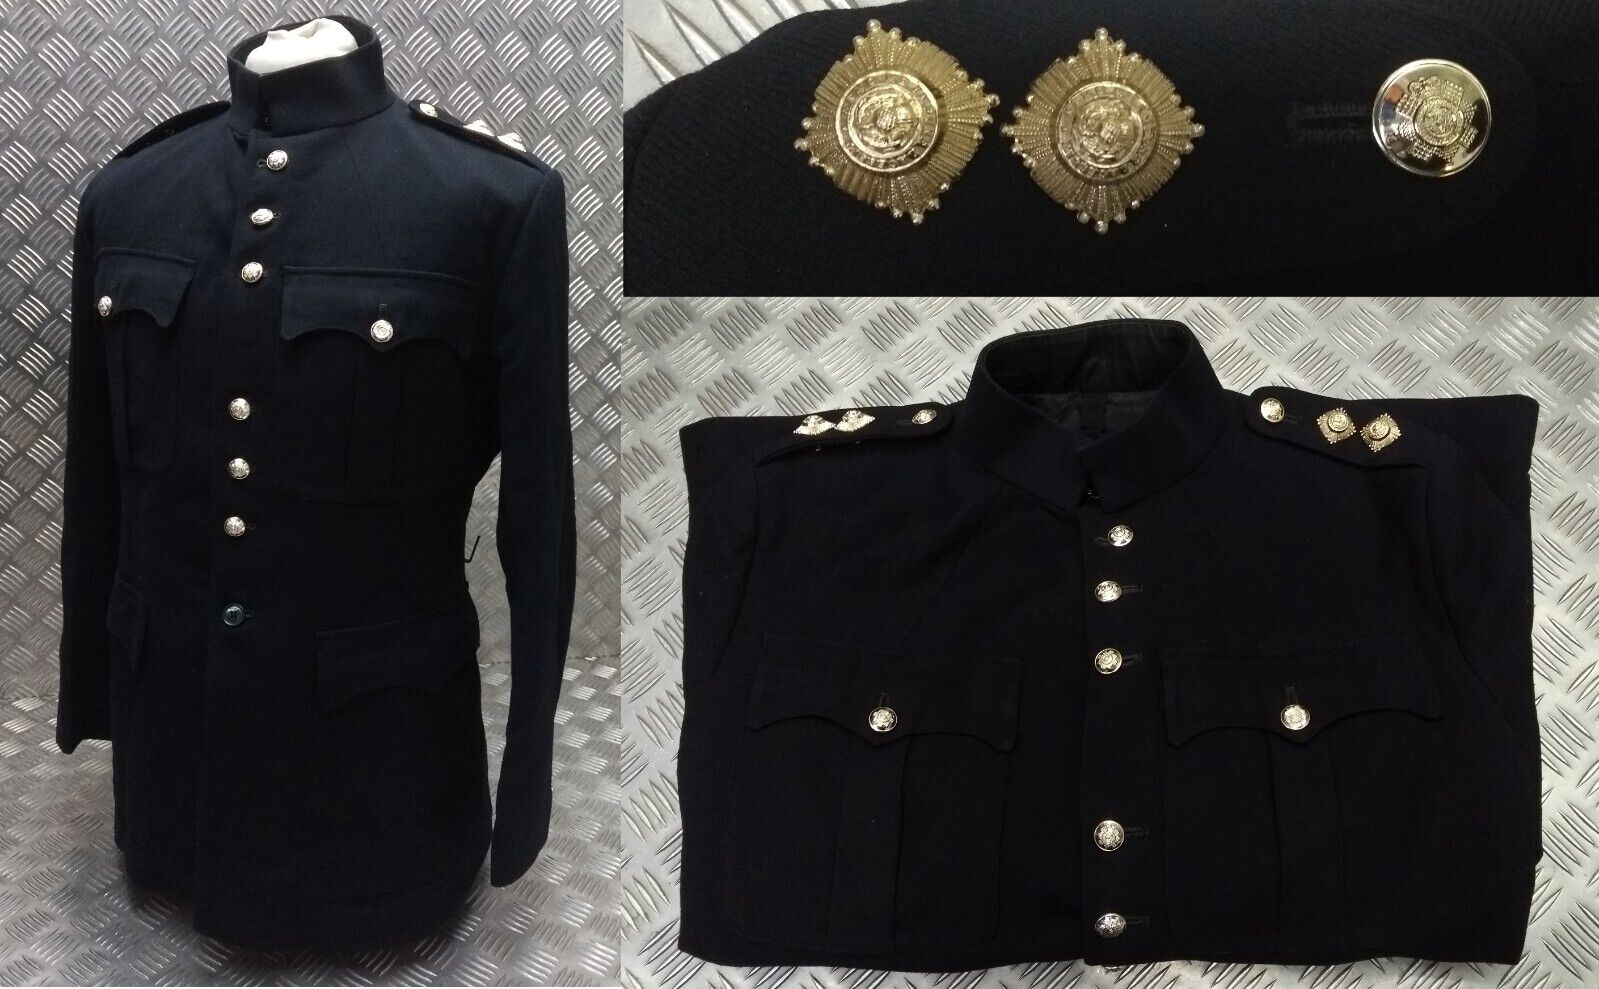 No1 Scots Guards Lieutenant Rank Vintage Uniform Dress Jacket & Insignia Buttons